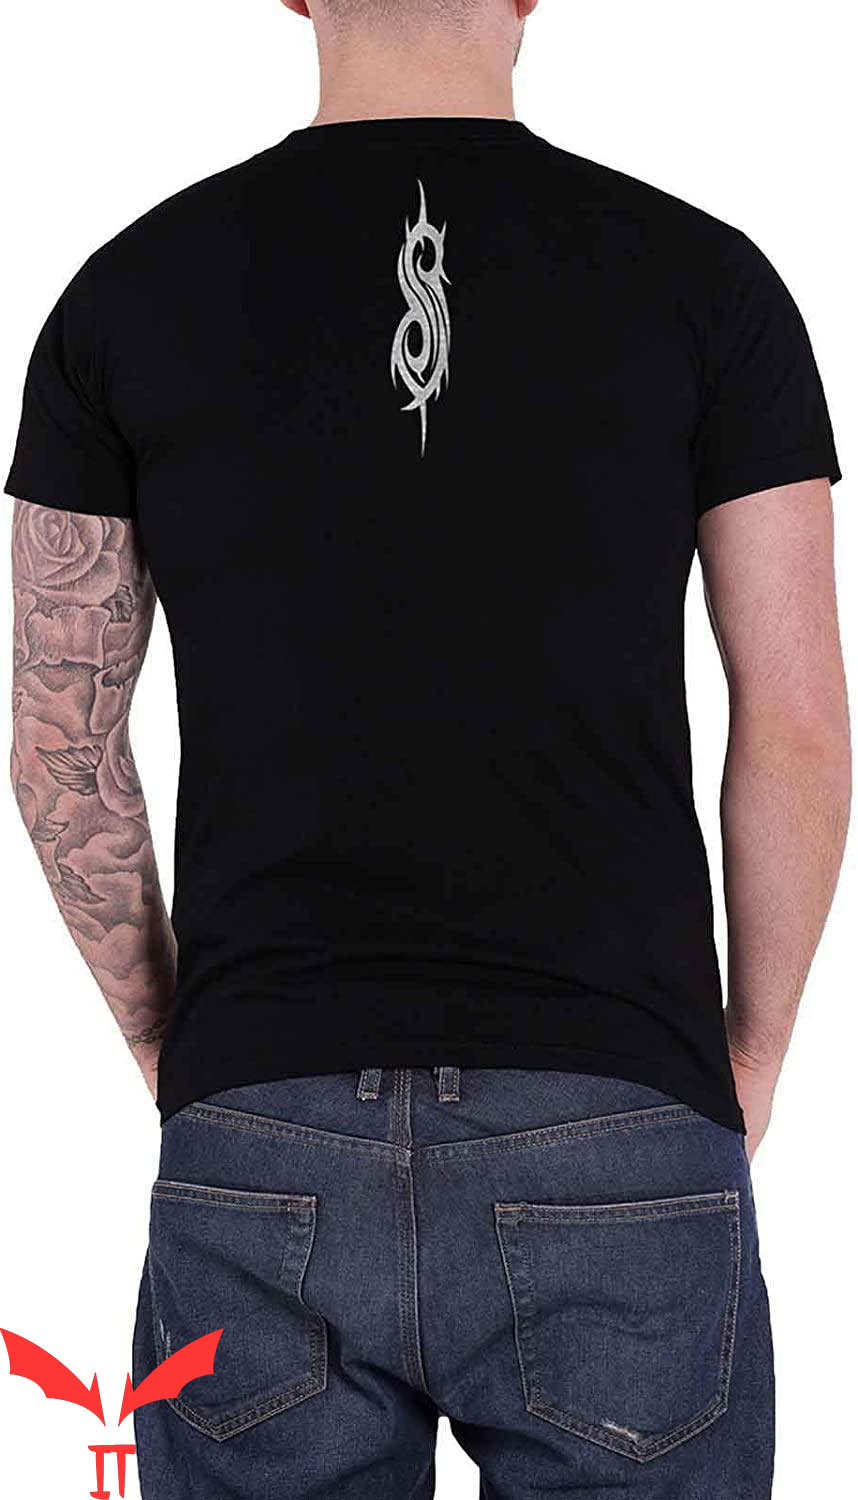 Slipknot Iowa T-Shirt Iowa Goat Trendy Classic Design